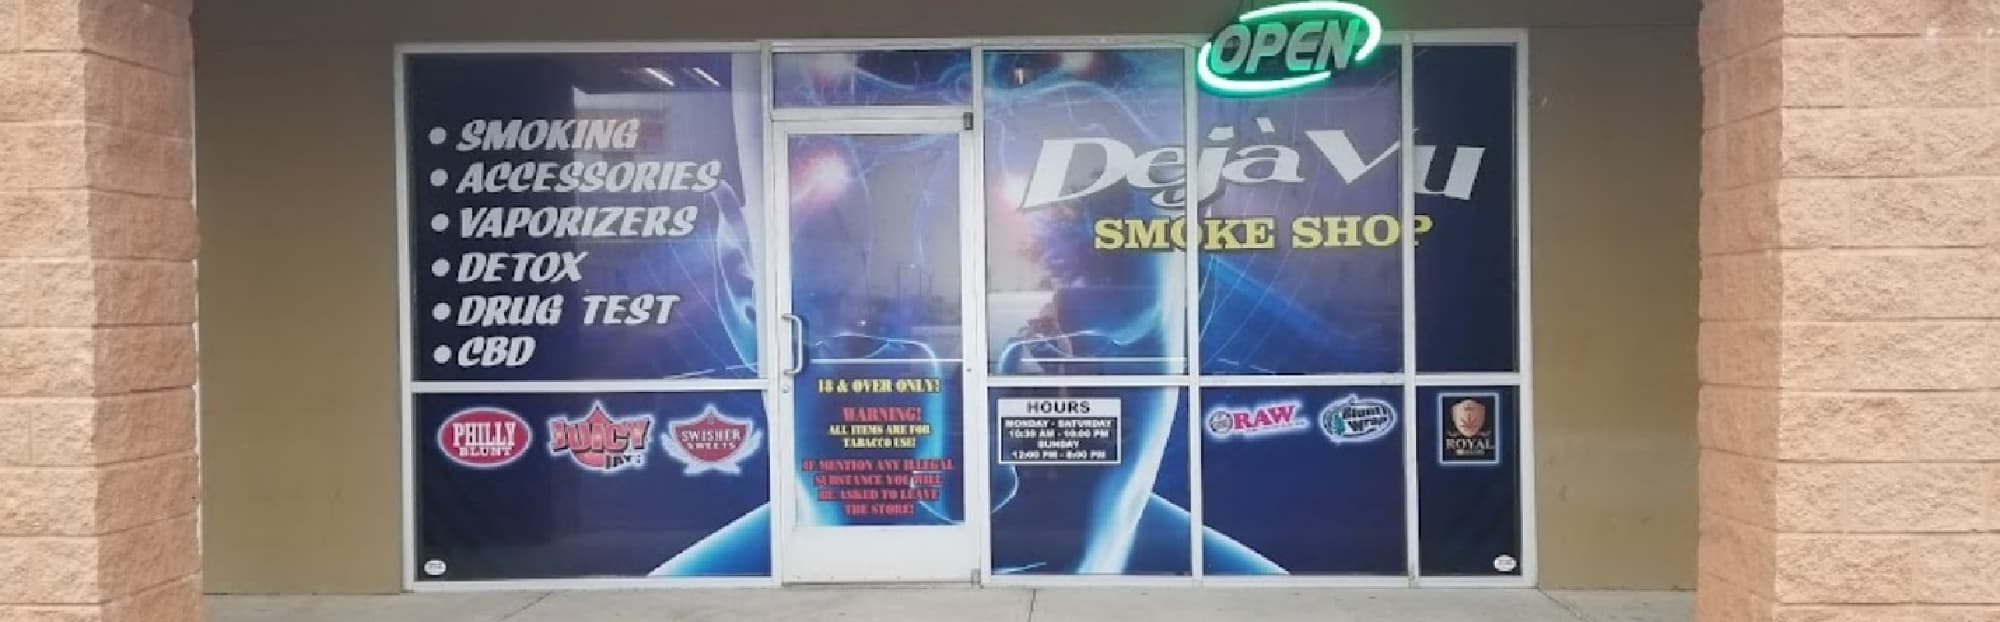 image of deja vu smoke shop in pharr tx